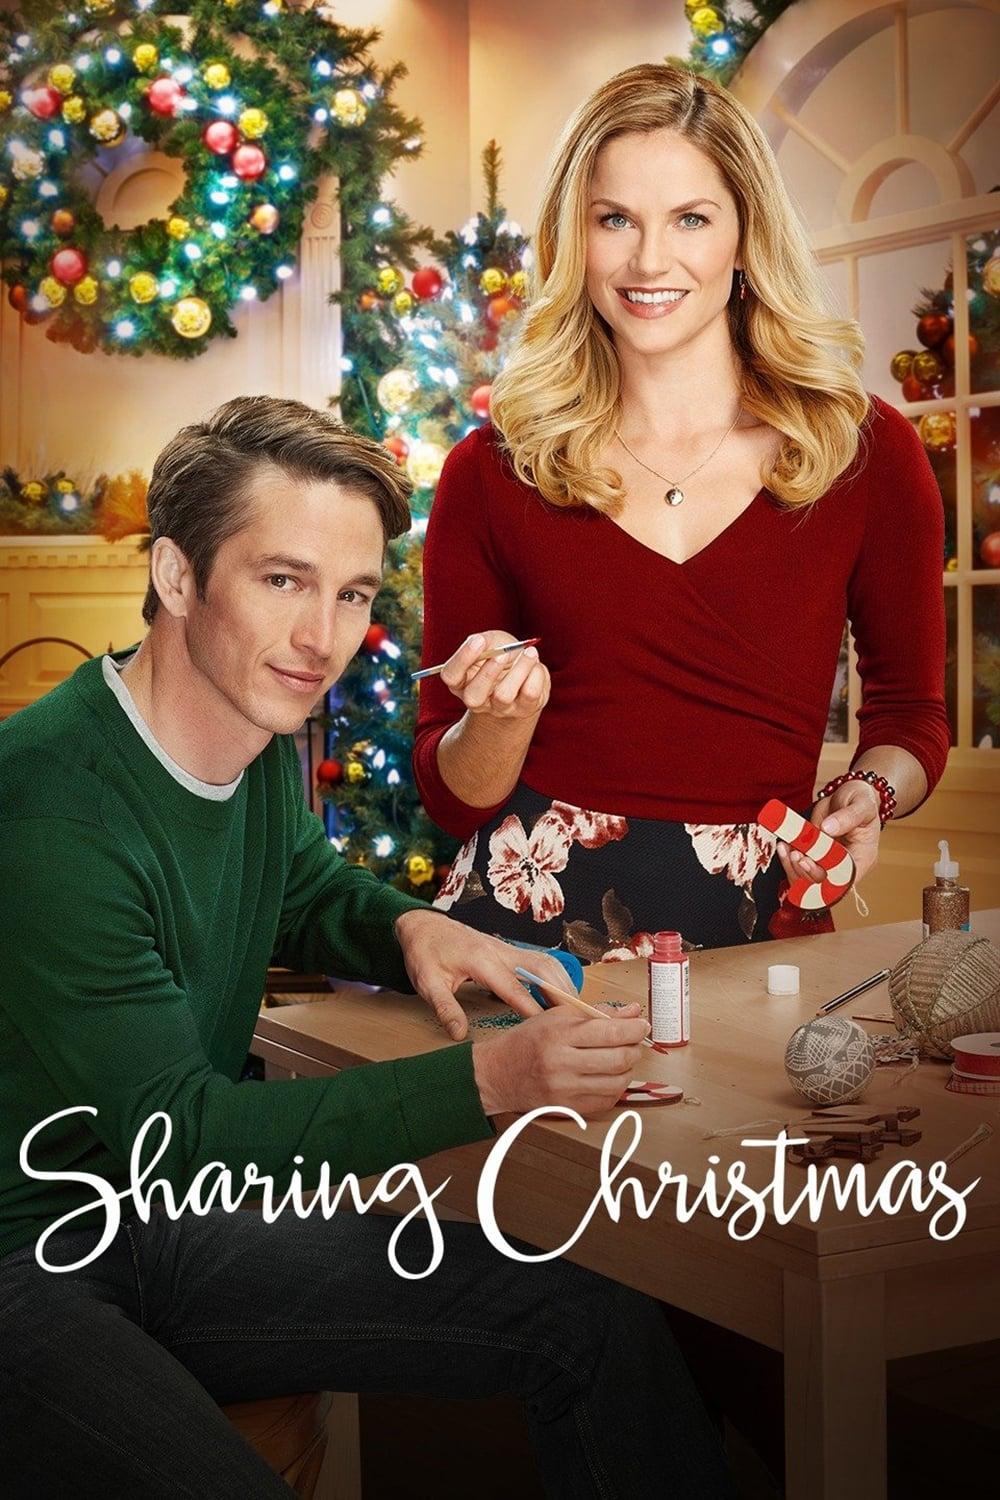 Sharing Christmas poster